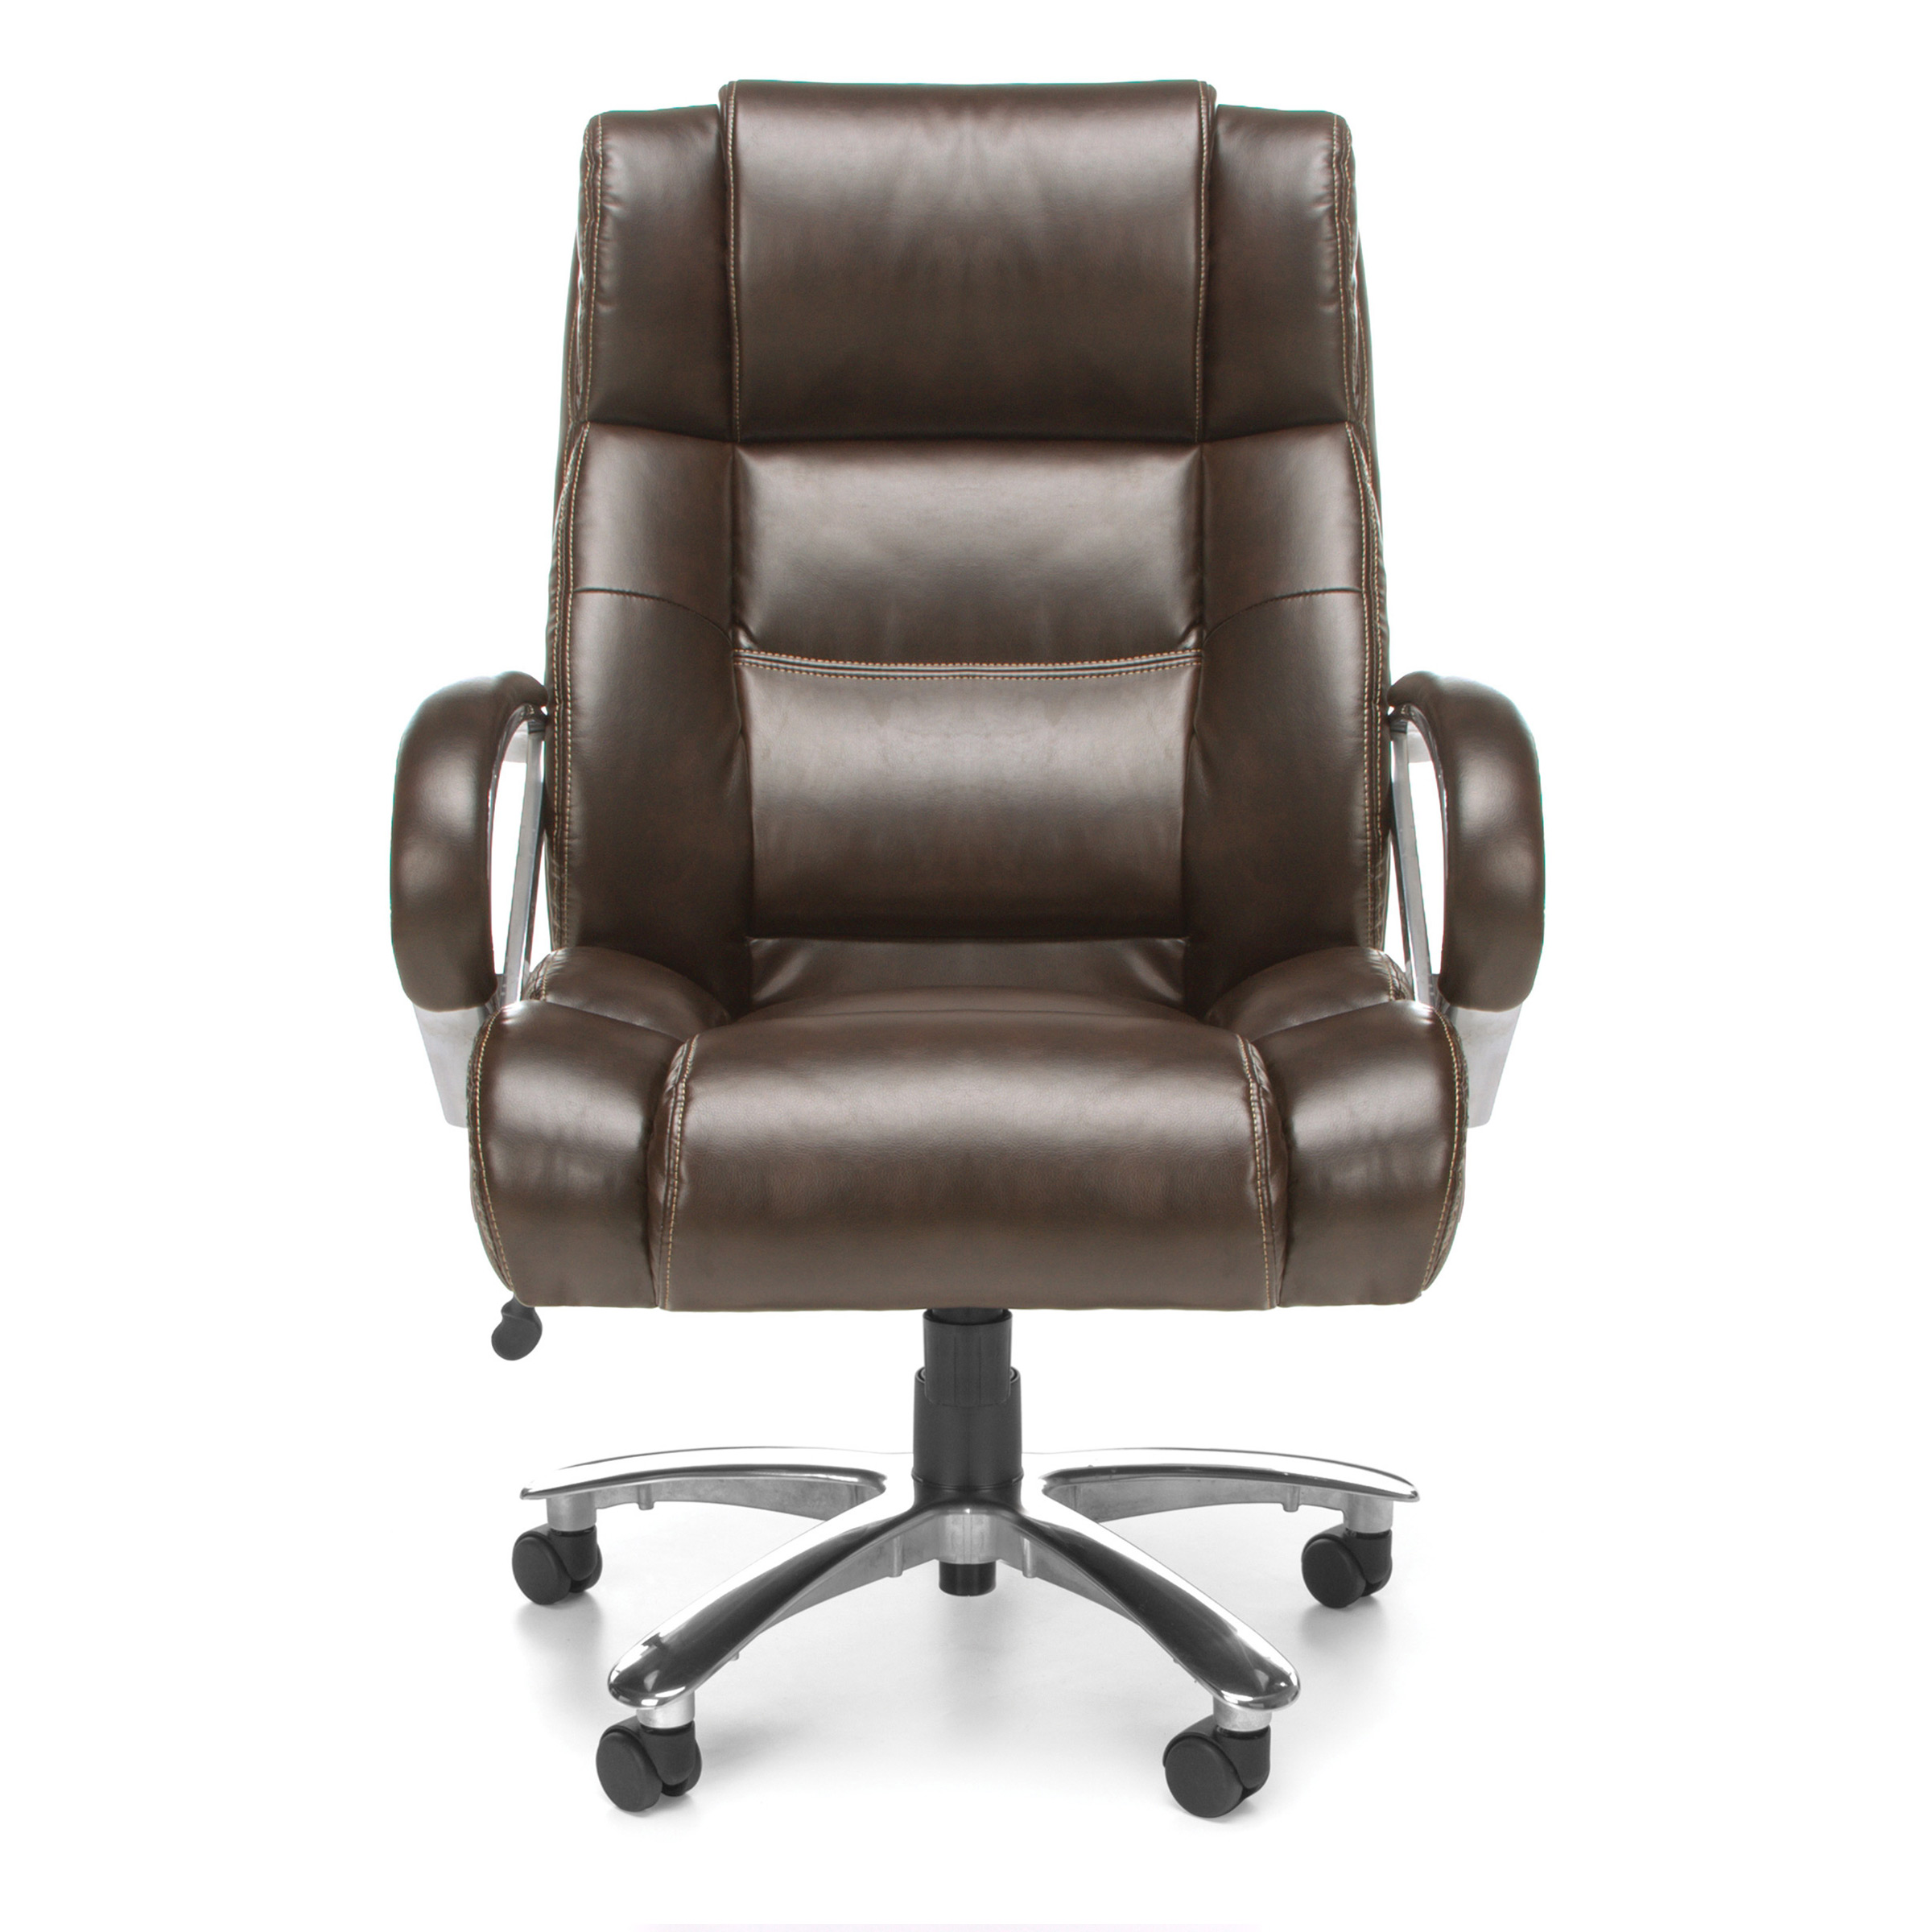 Office Chair For 500 Lbs - HERCULES Series 500 lb. Capacity Big & Tall